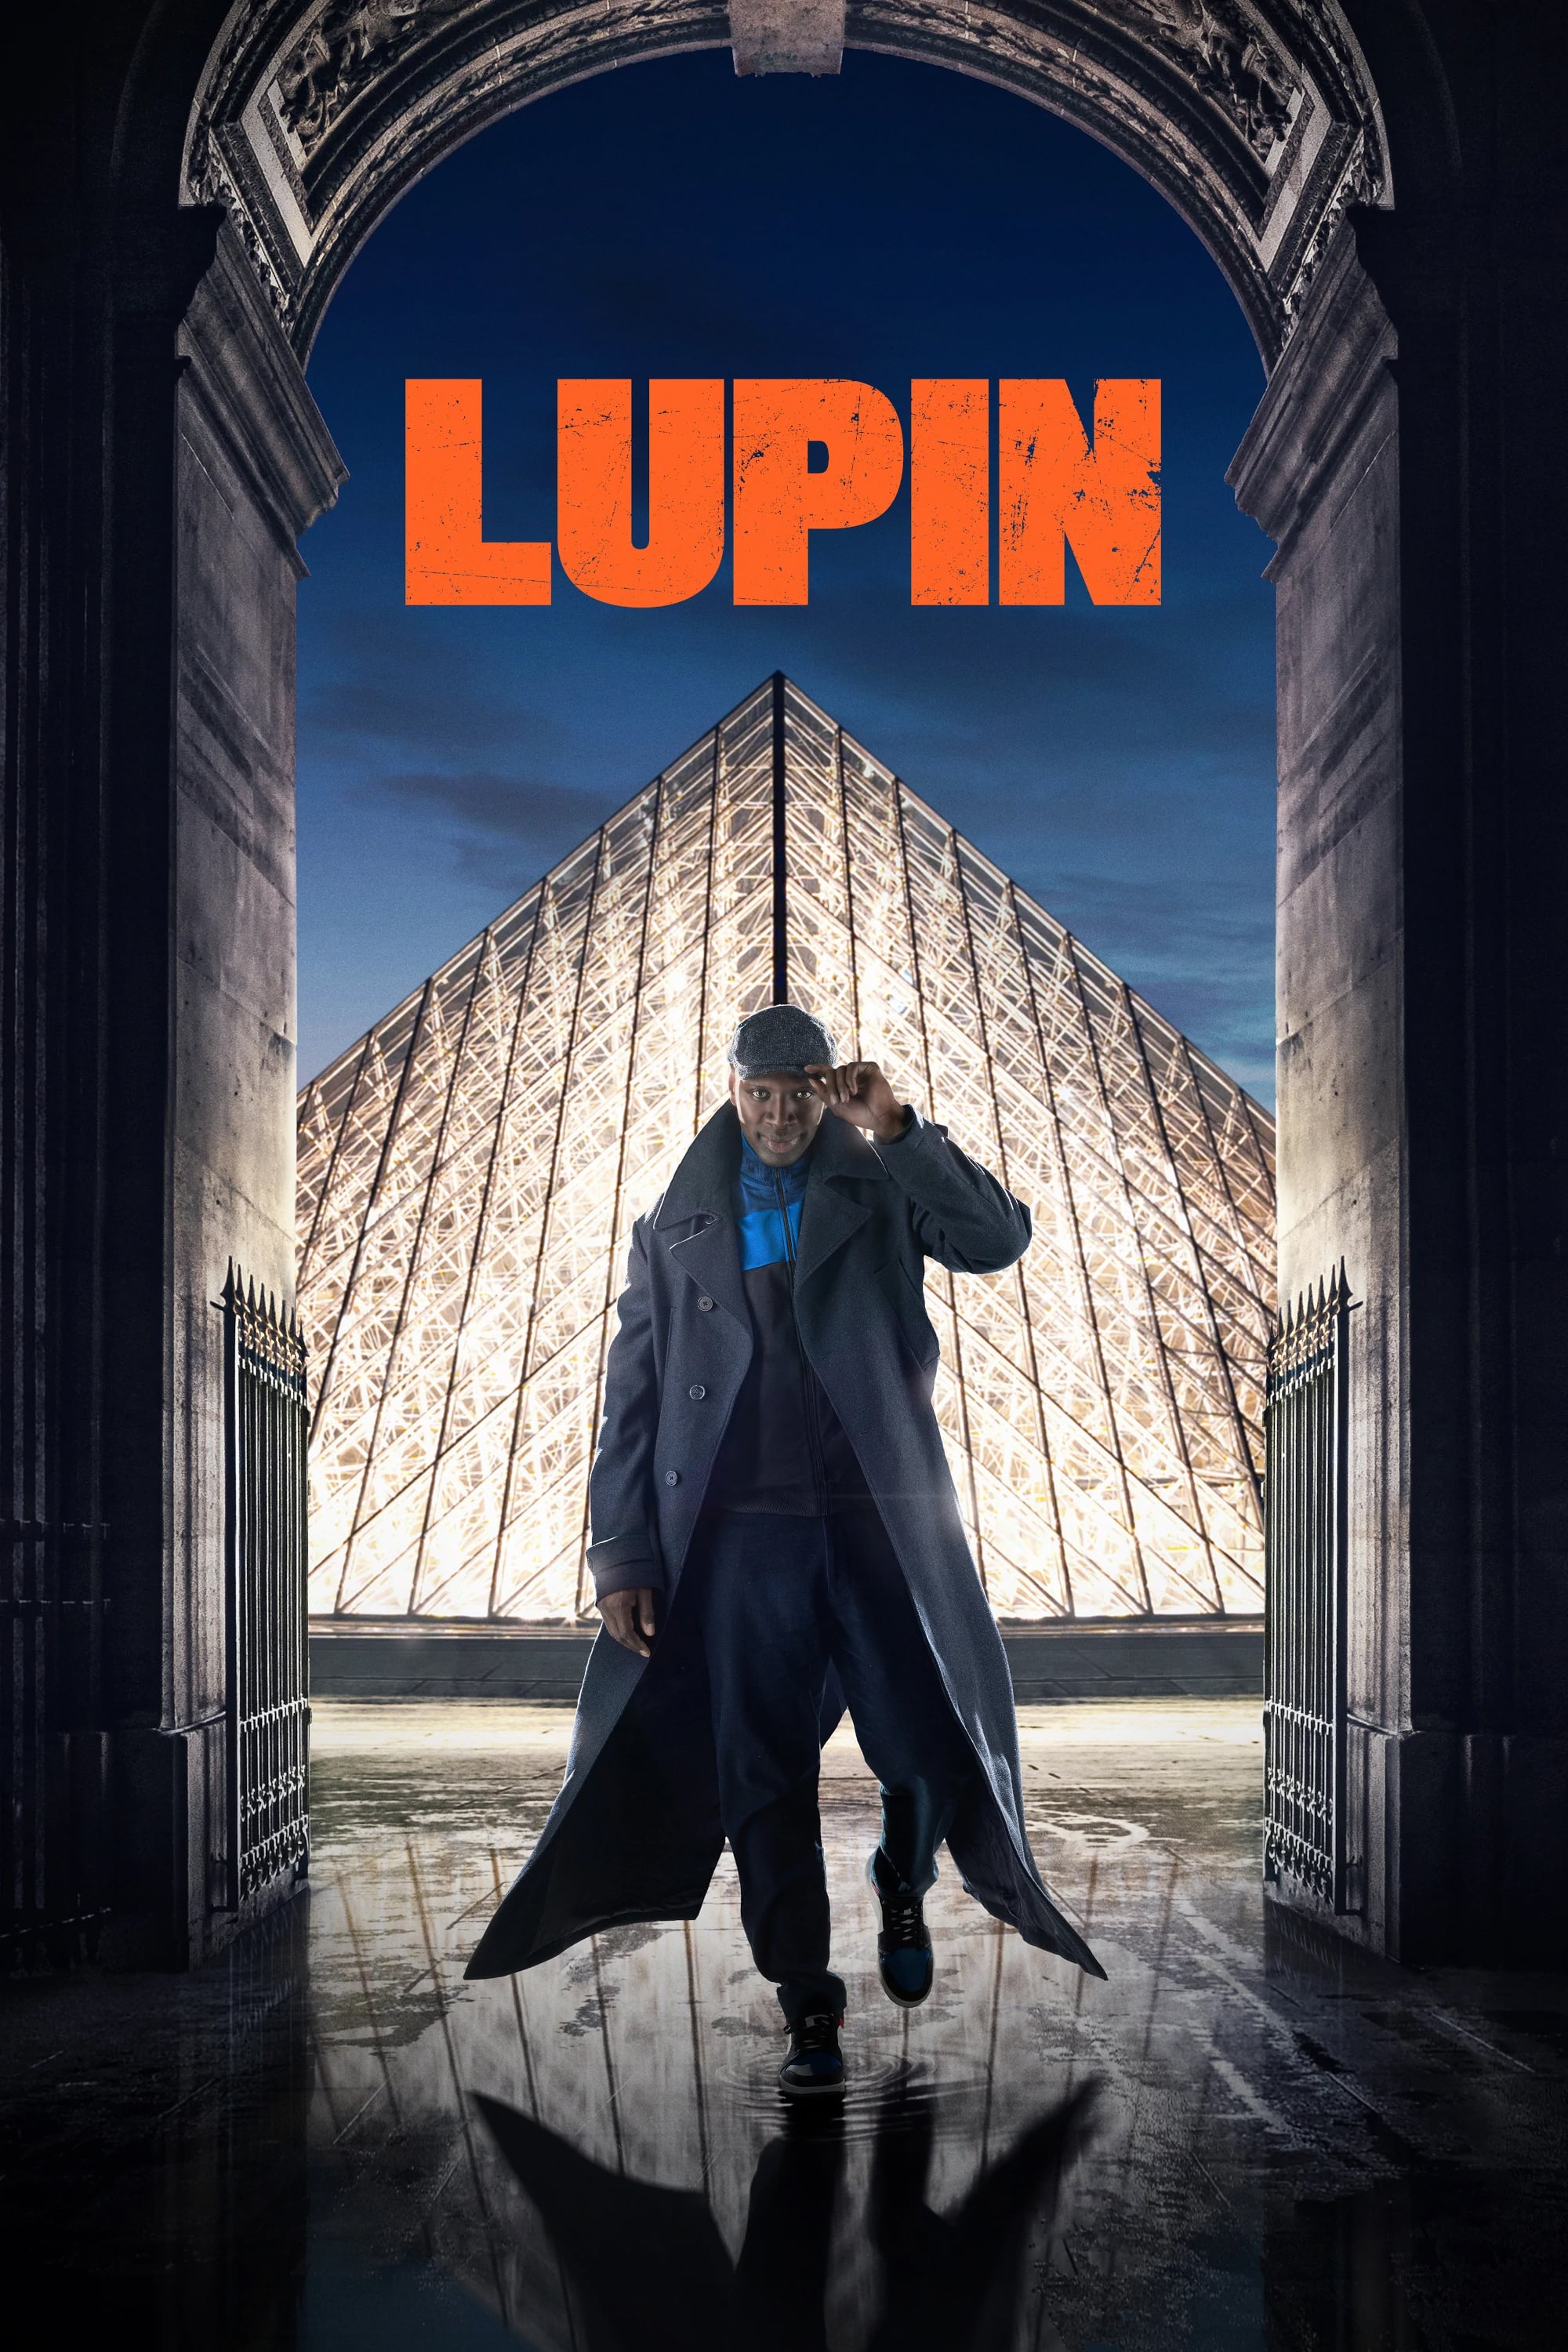 Lupin rating